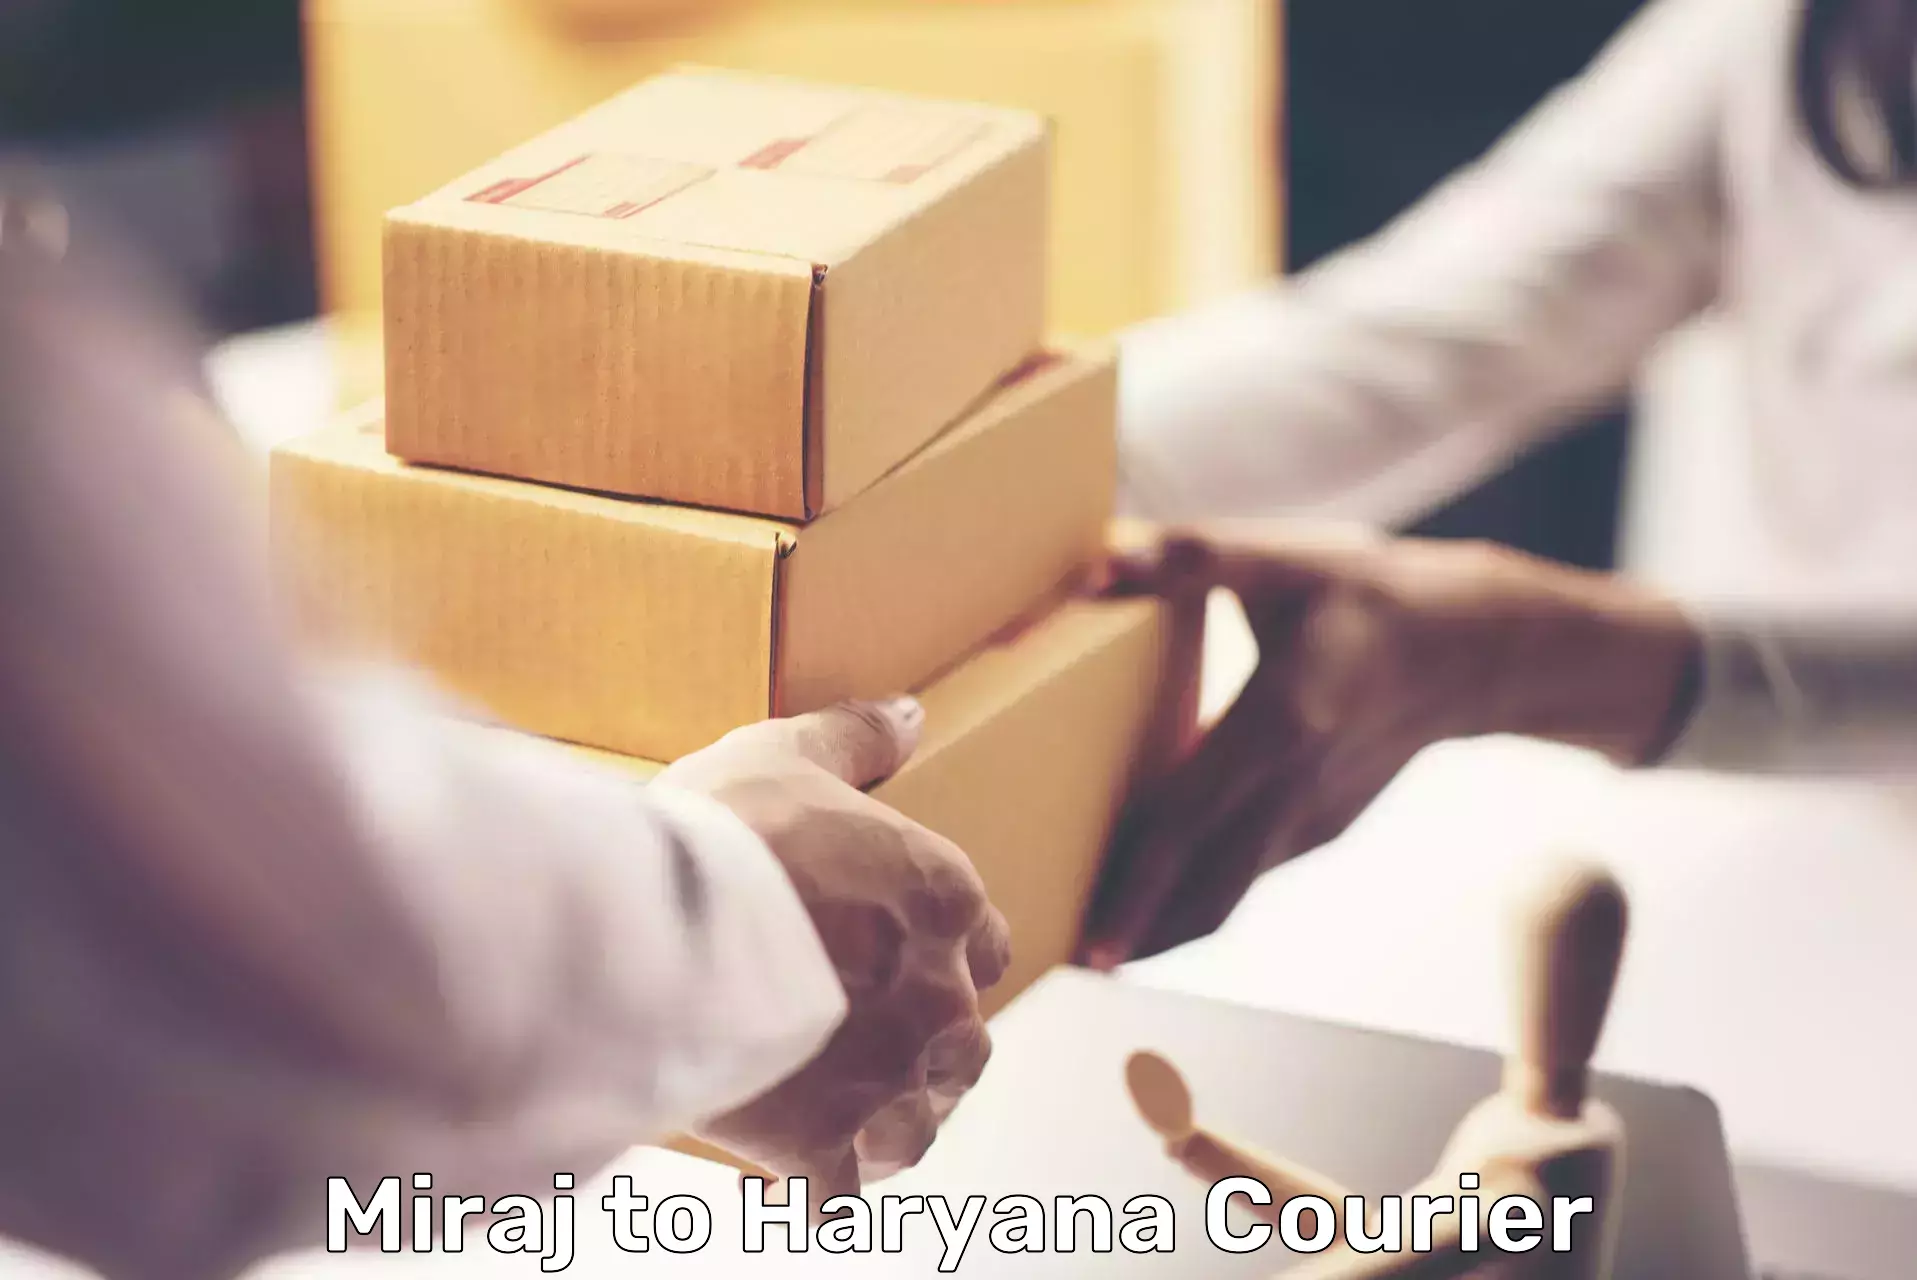 Courier app Miraj to Panchkula